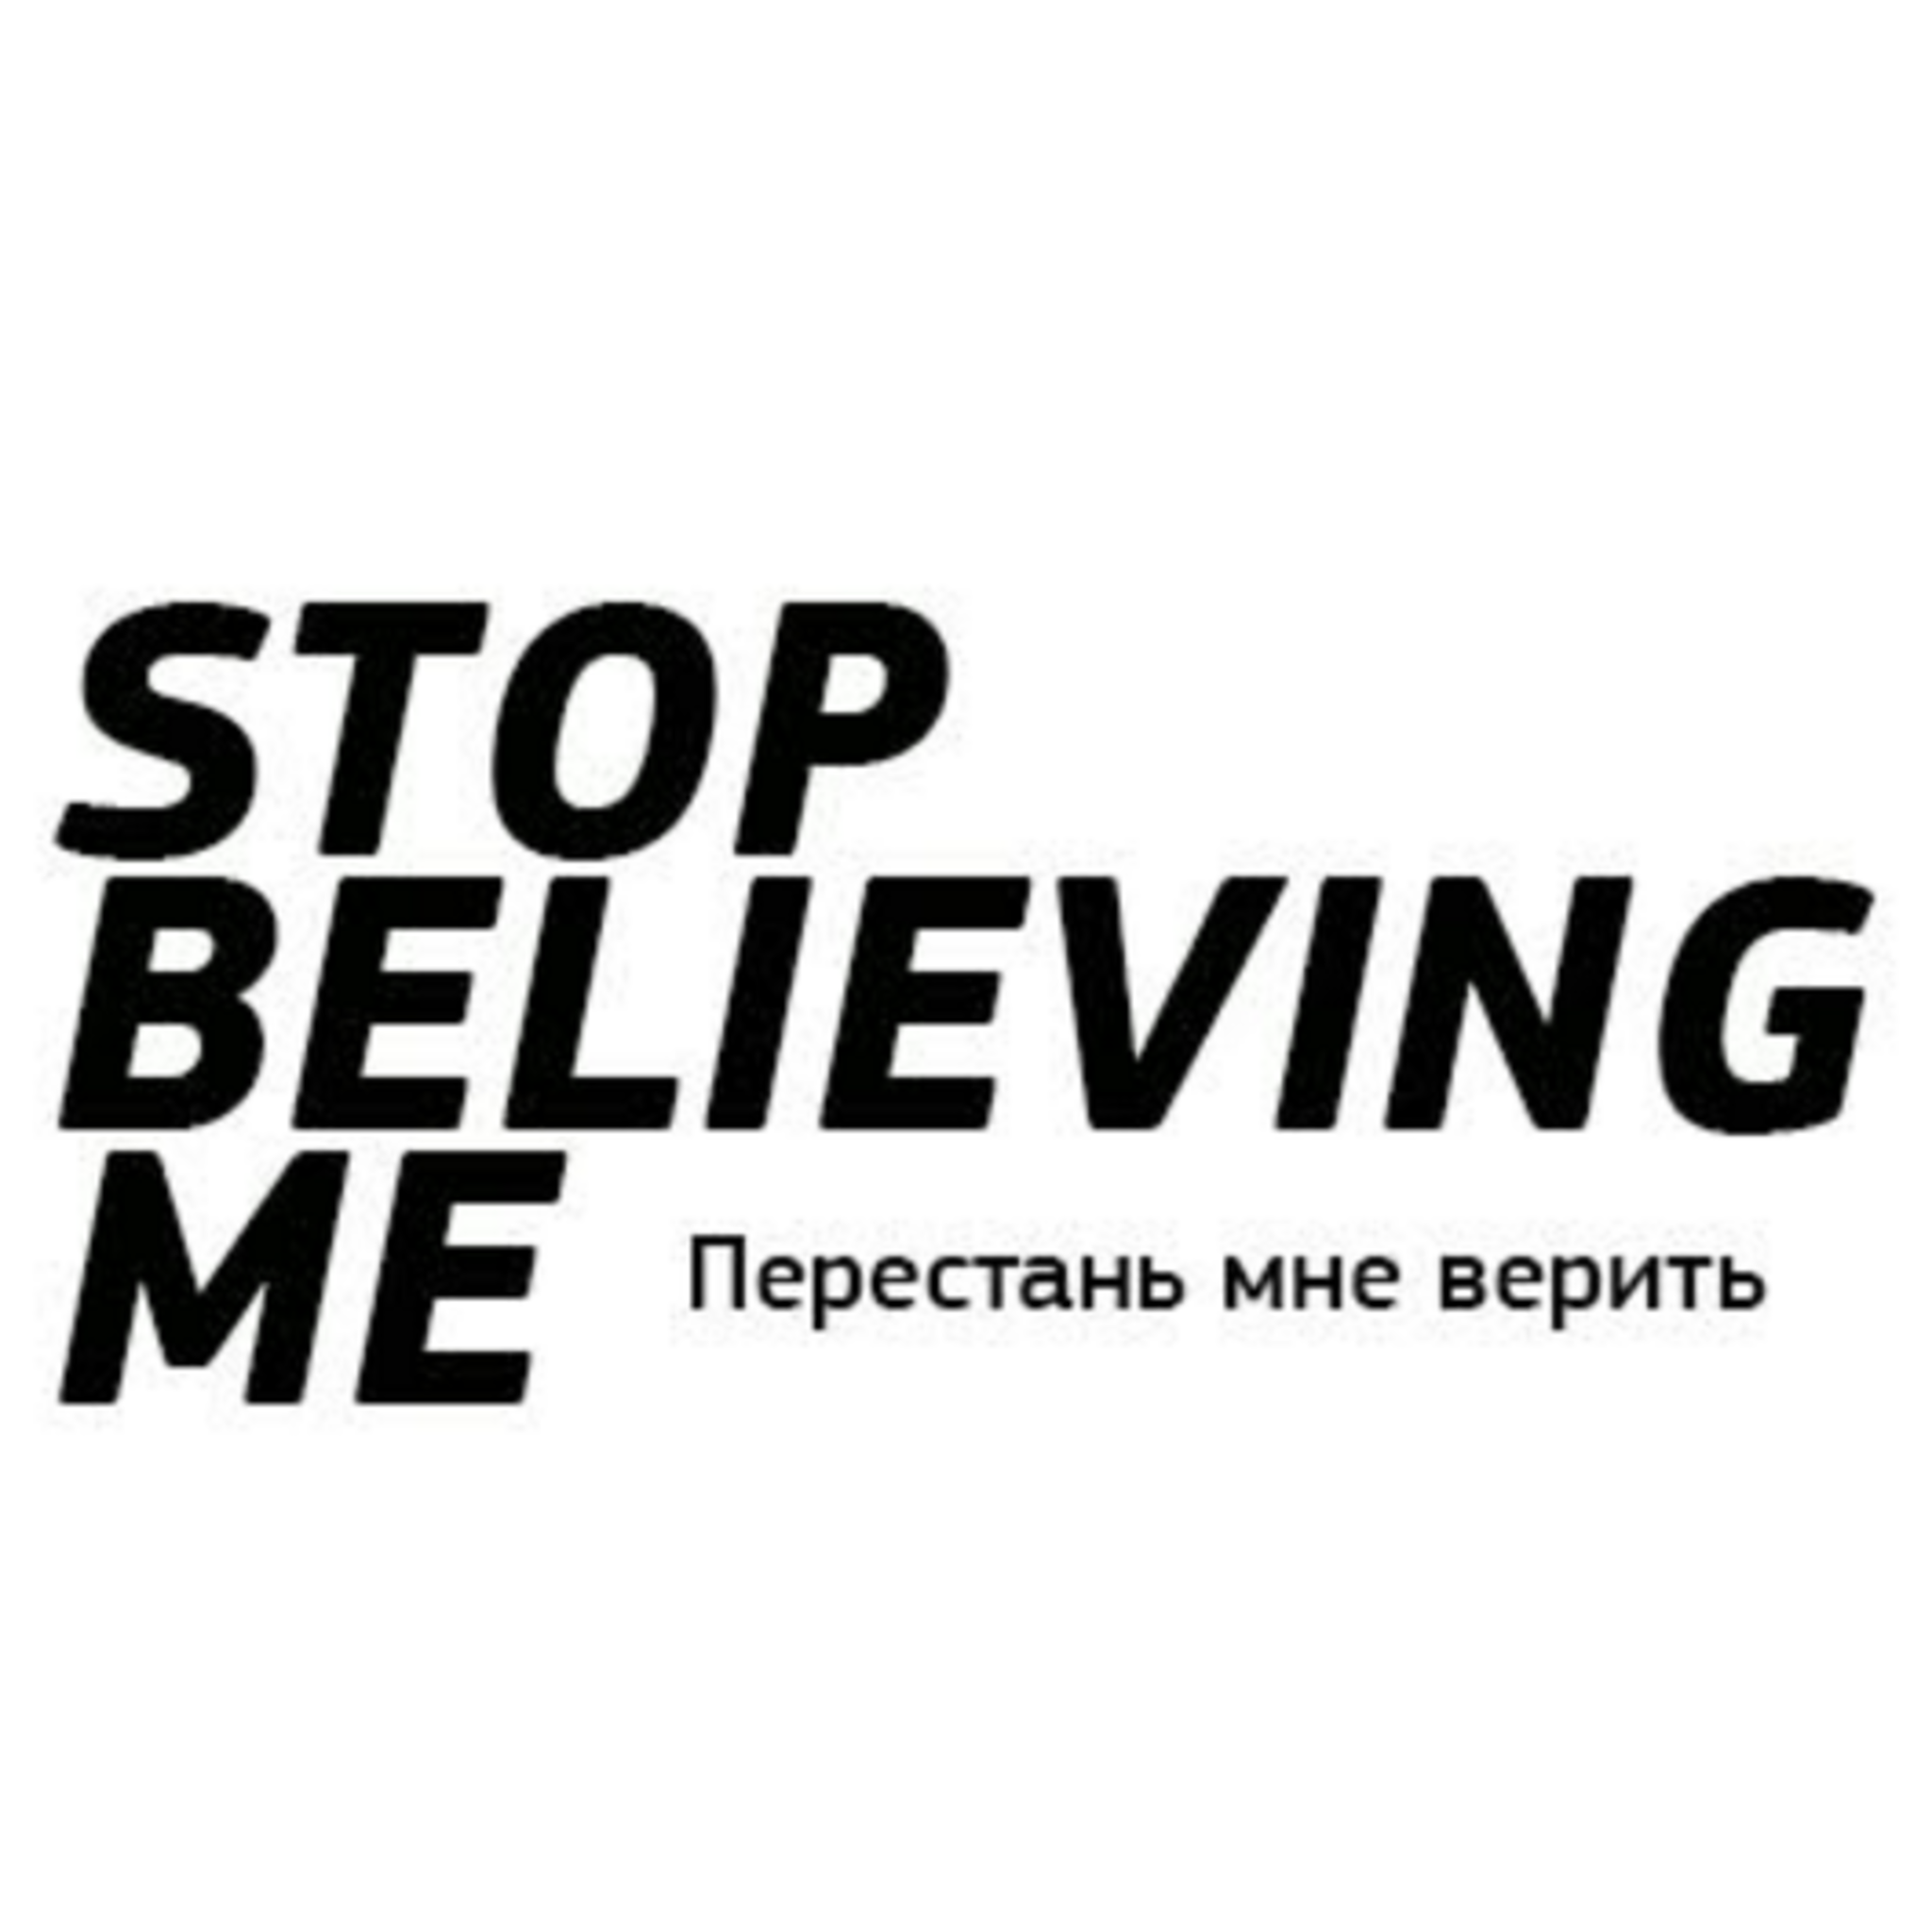 Discussion Public-talk: Come to believe me